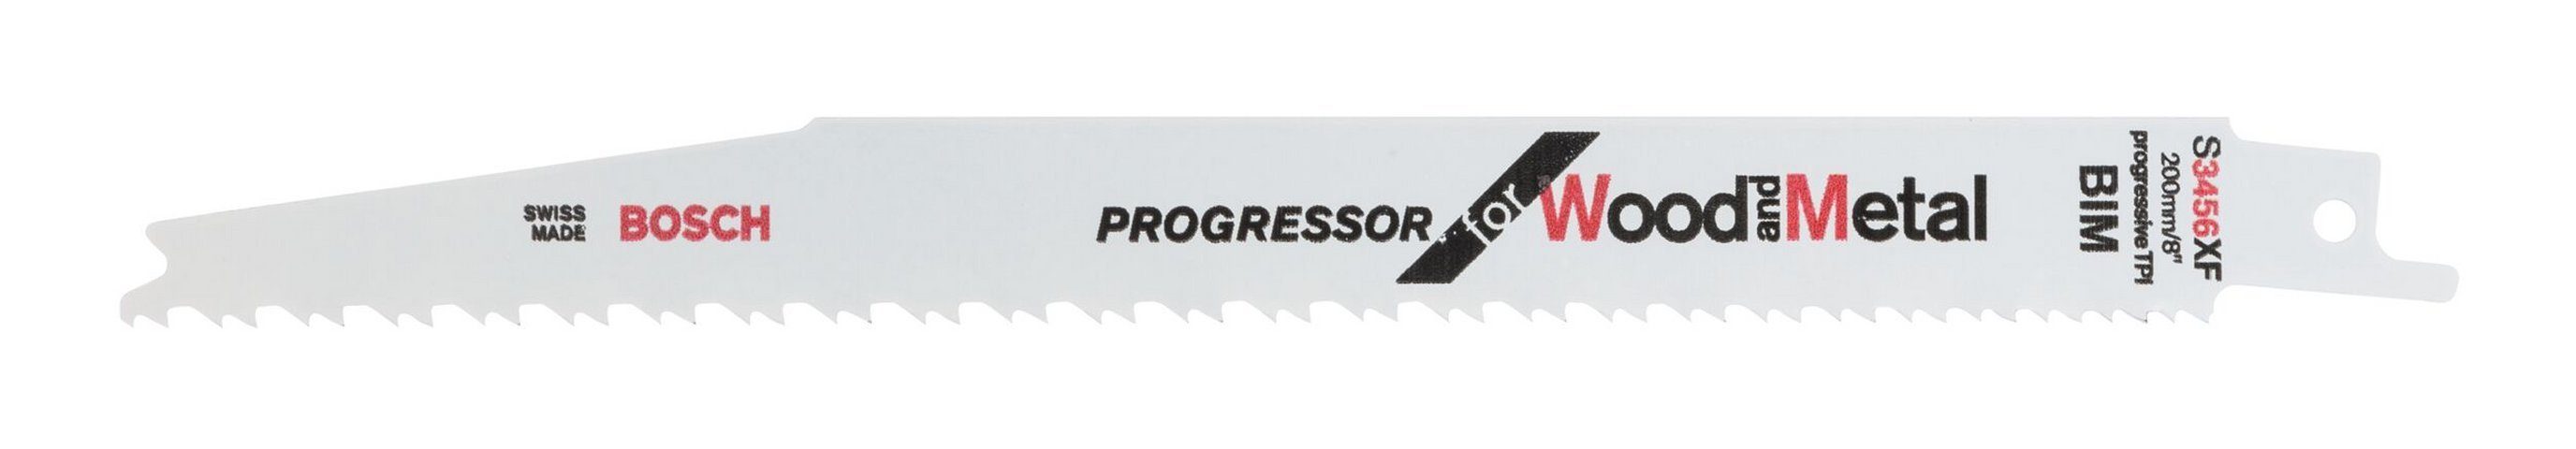 Säbelsägeblatt S Stück), XF - 2er-Pack (2 BOSCH 3456 for Progressor and Wood Metal